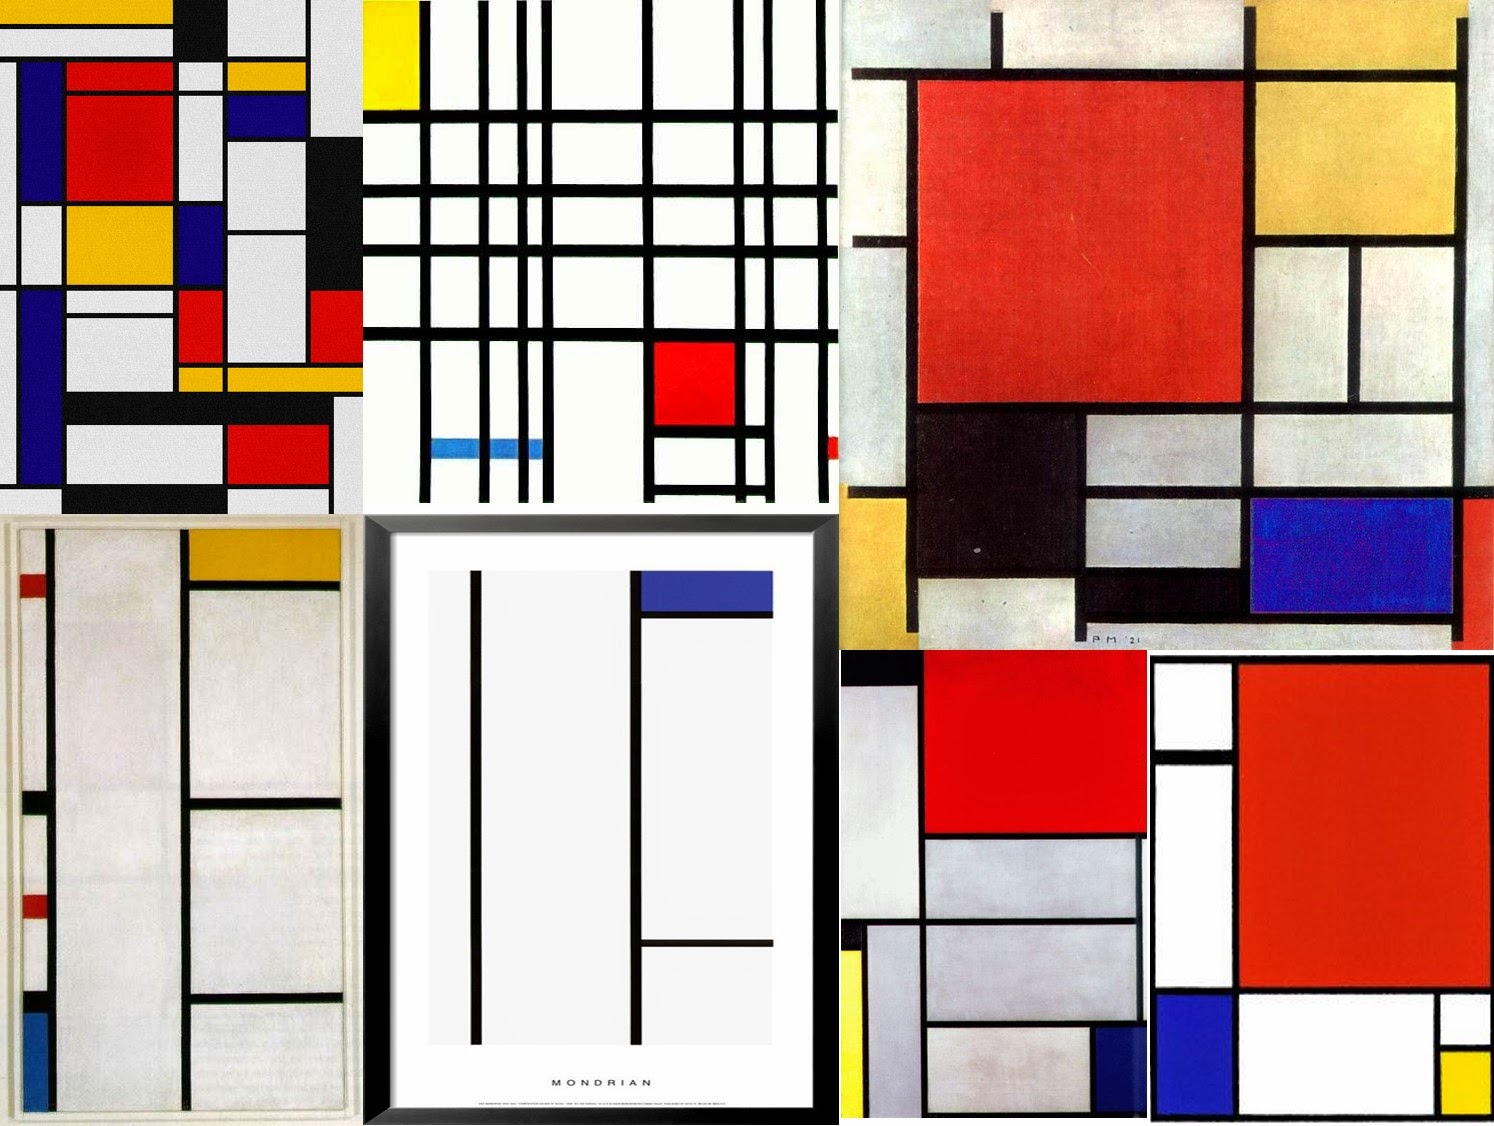 Christ The King Sixth Form College Contextual studies bBlog: Piet Mondrian